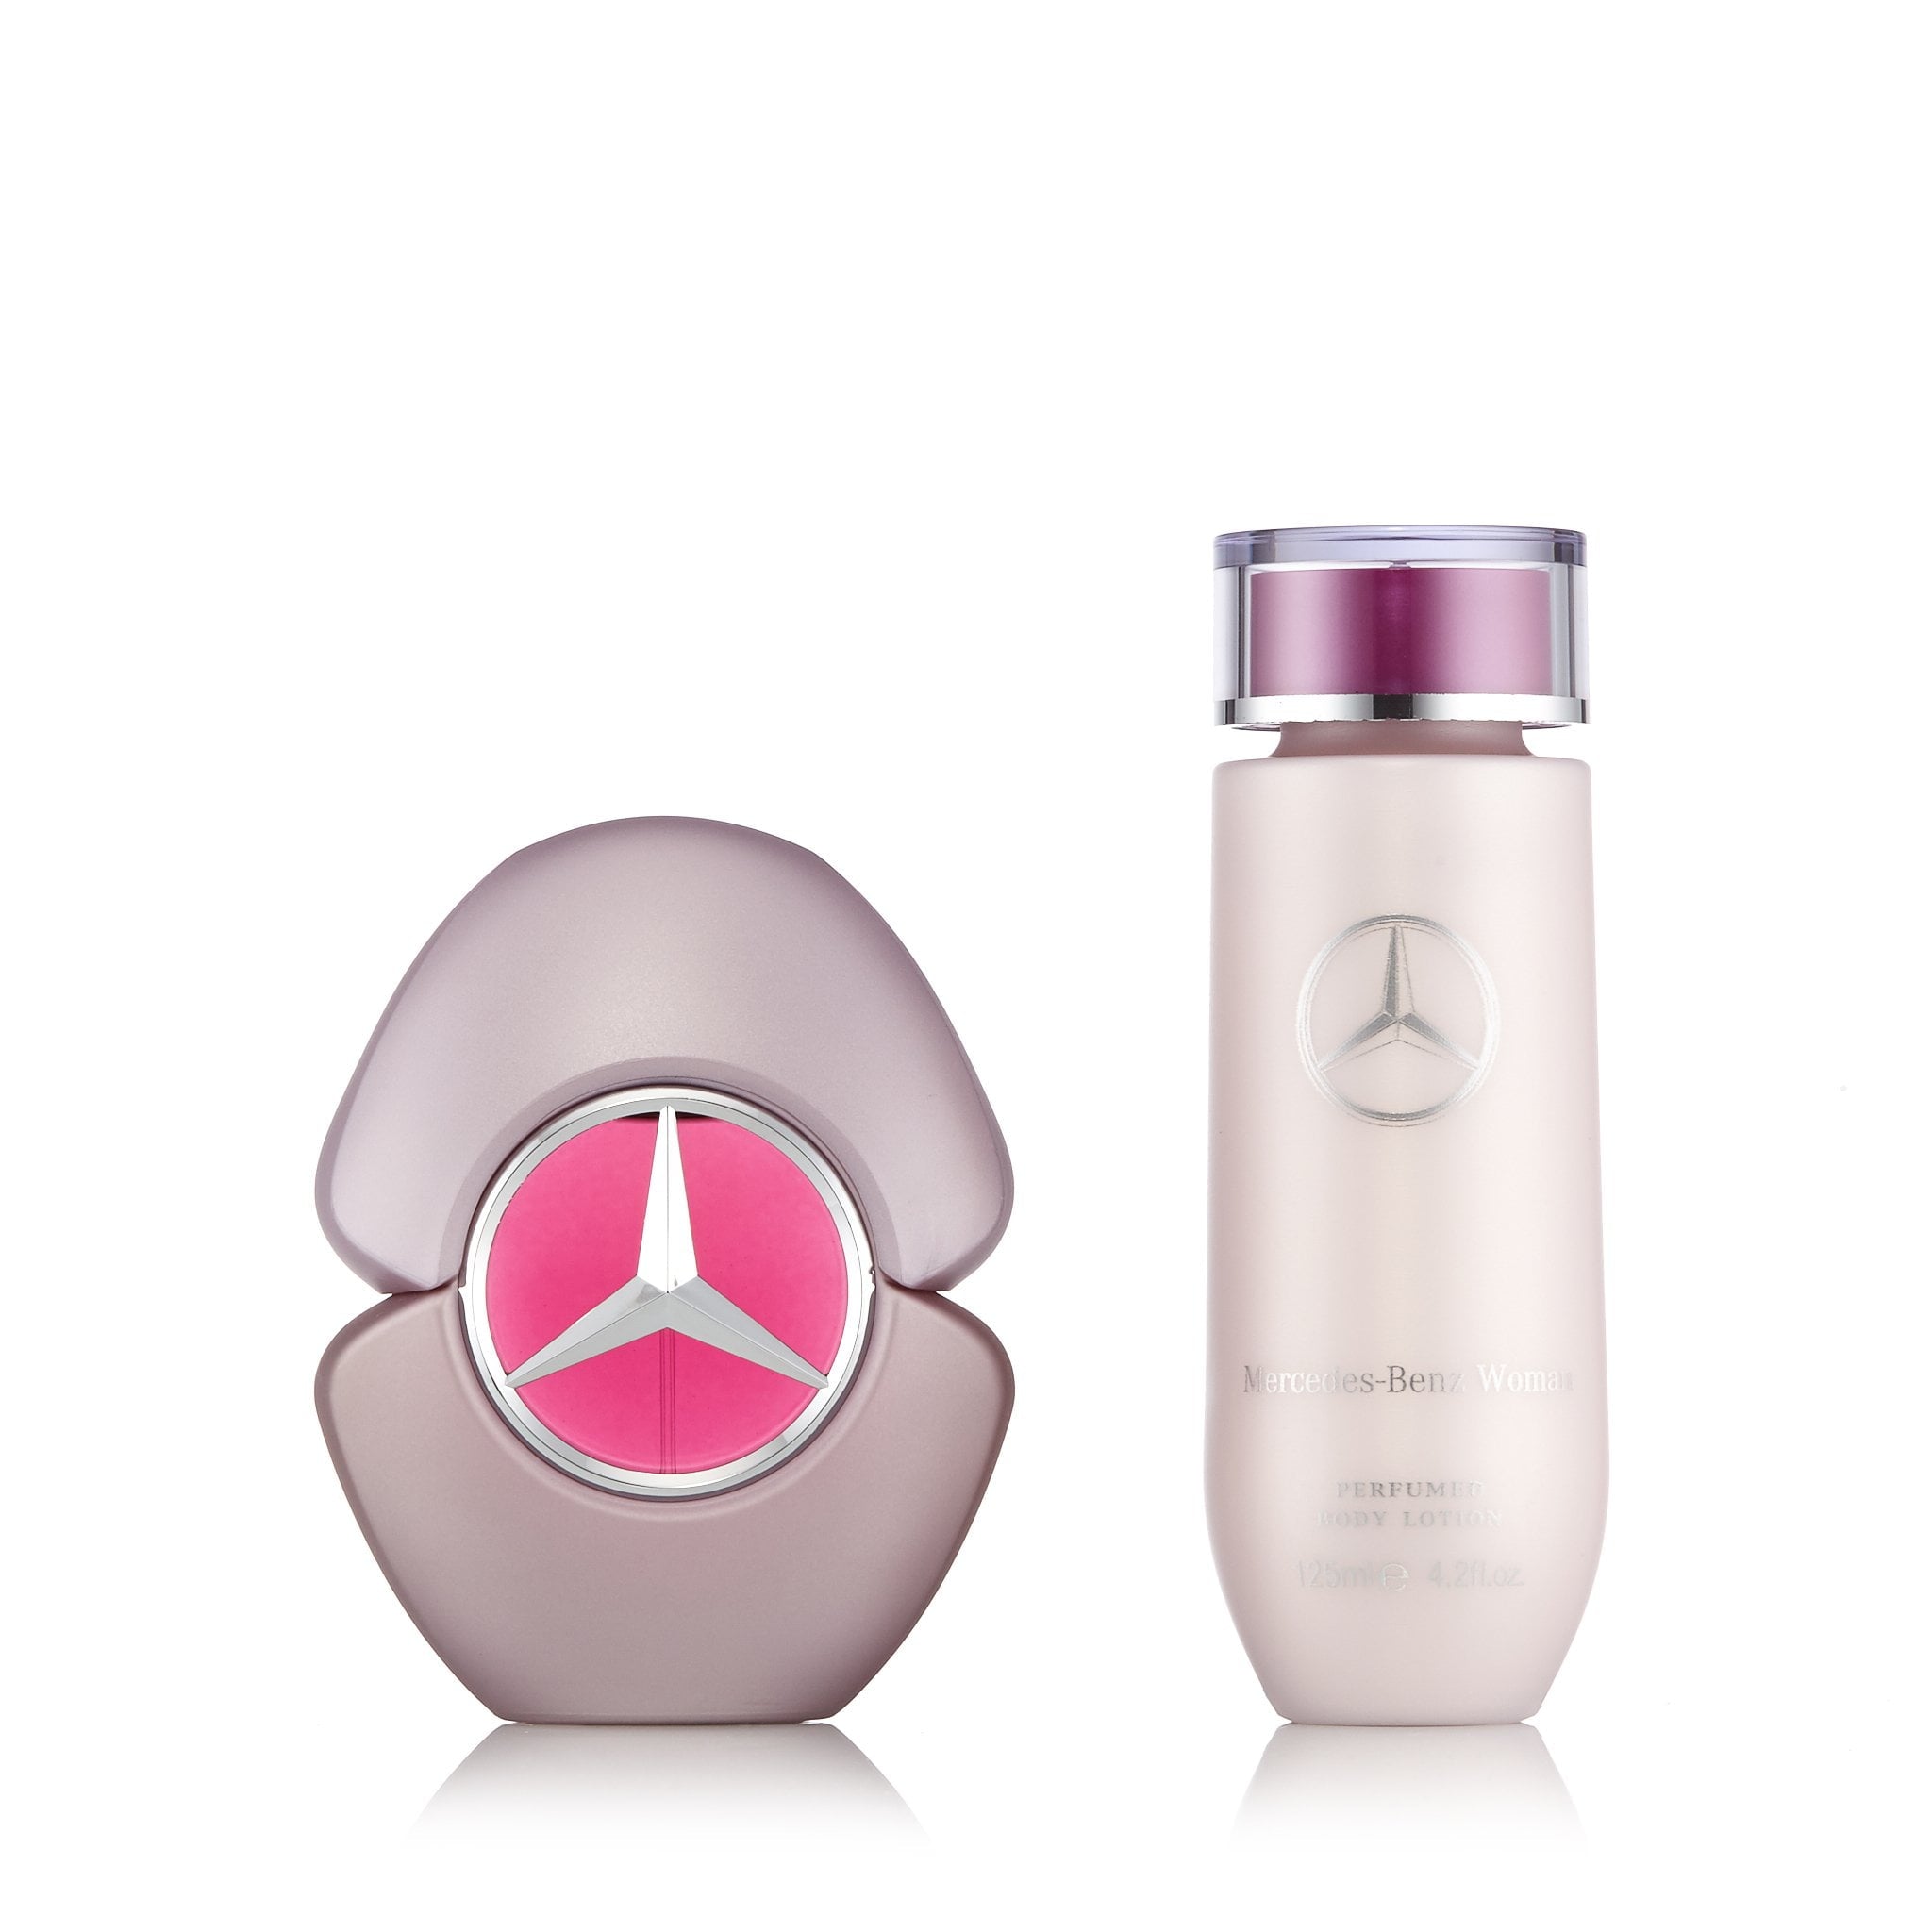 Mercedes-Benz Woman perfumes